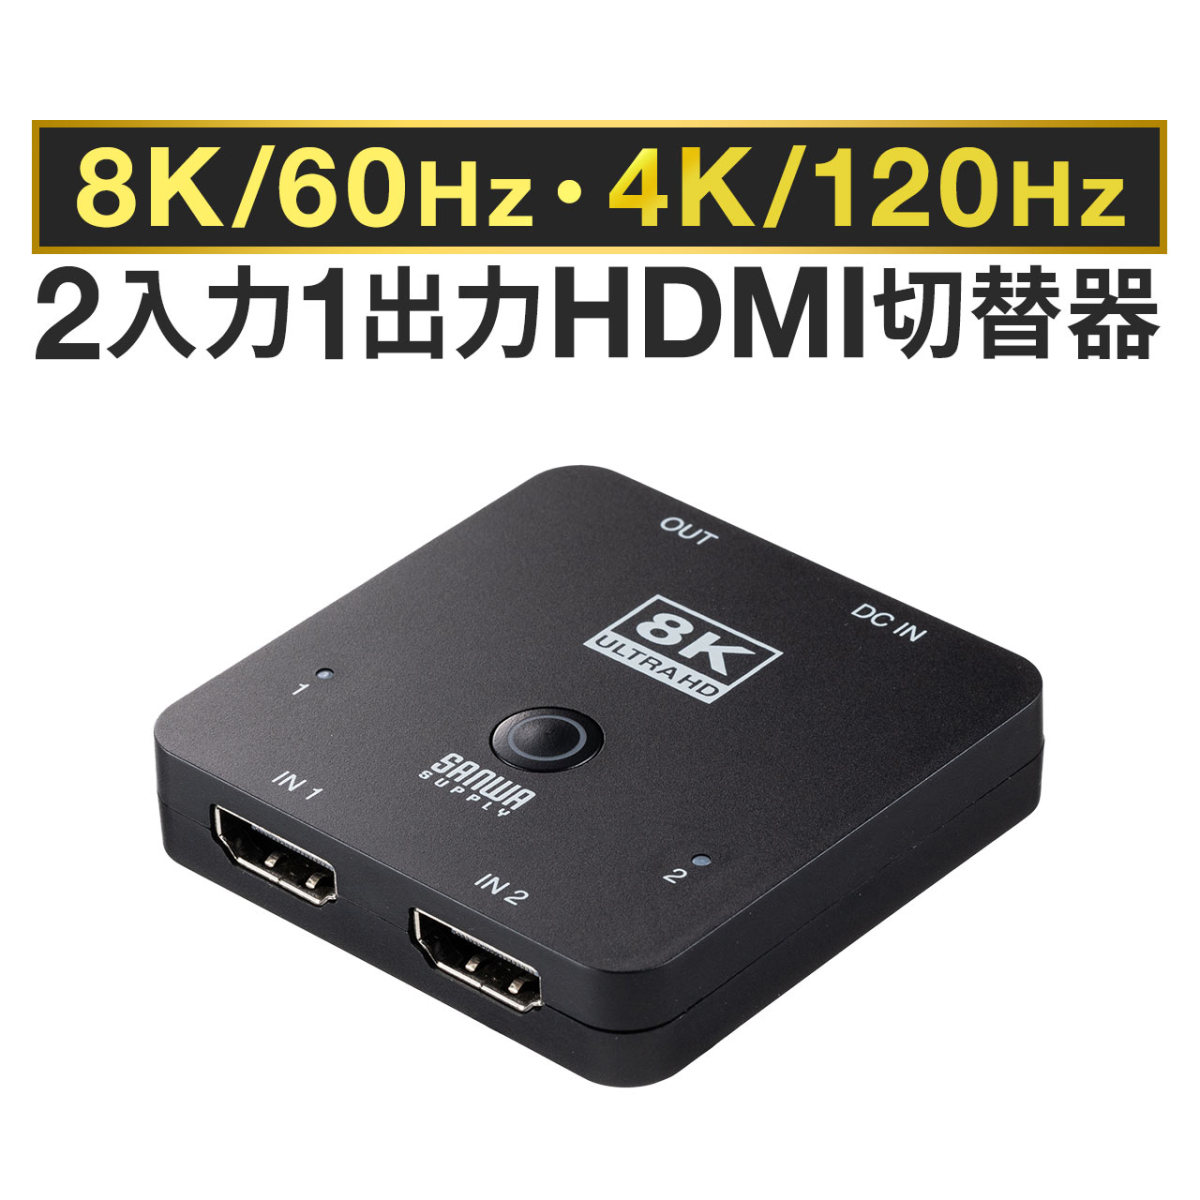 送料無料激安祭 HDMI切替器 HDMI分配器 HDMIセレクター 3入力1出力